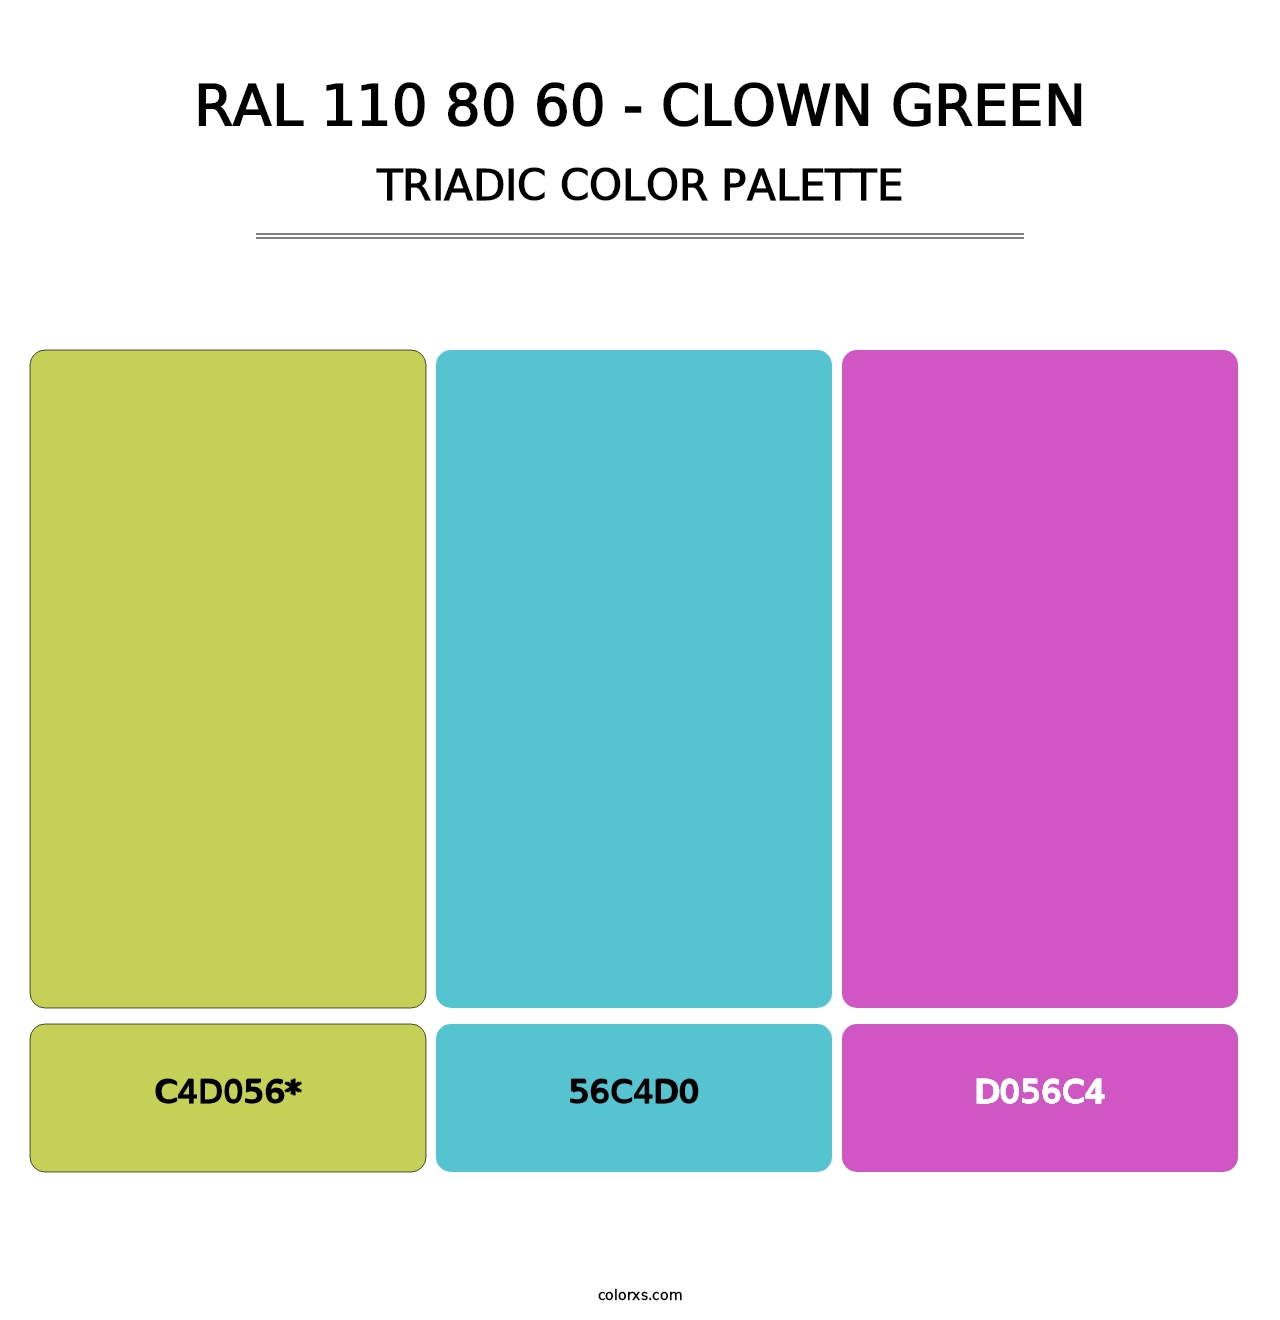 RAL 110 80 60 - Clown Green - Triadic Color Palette